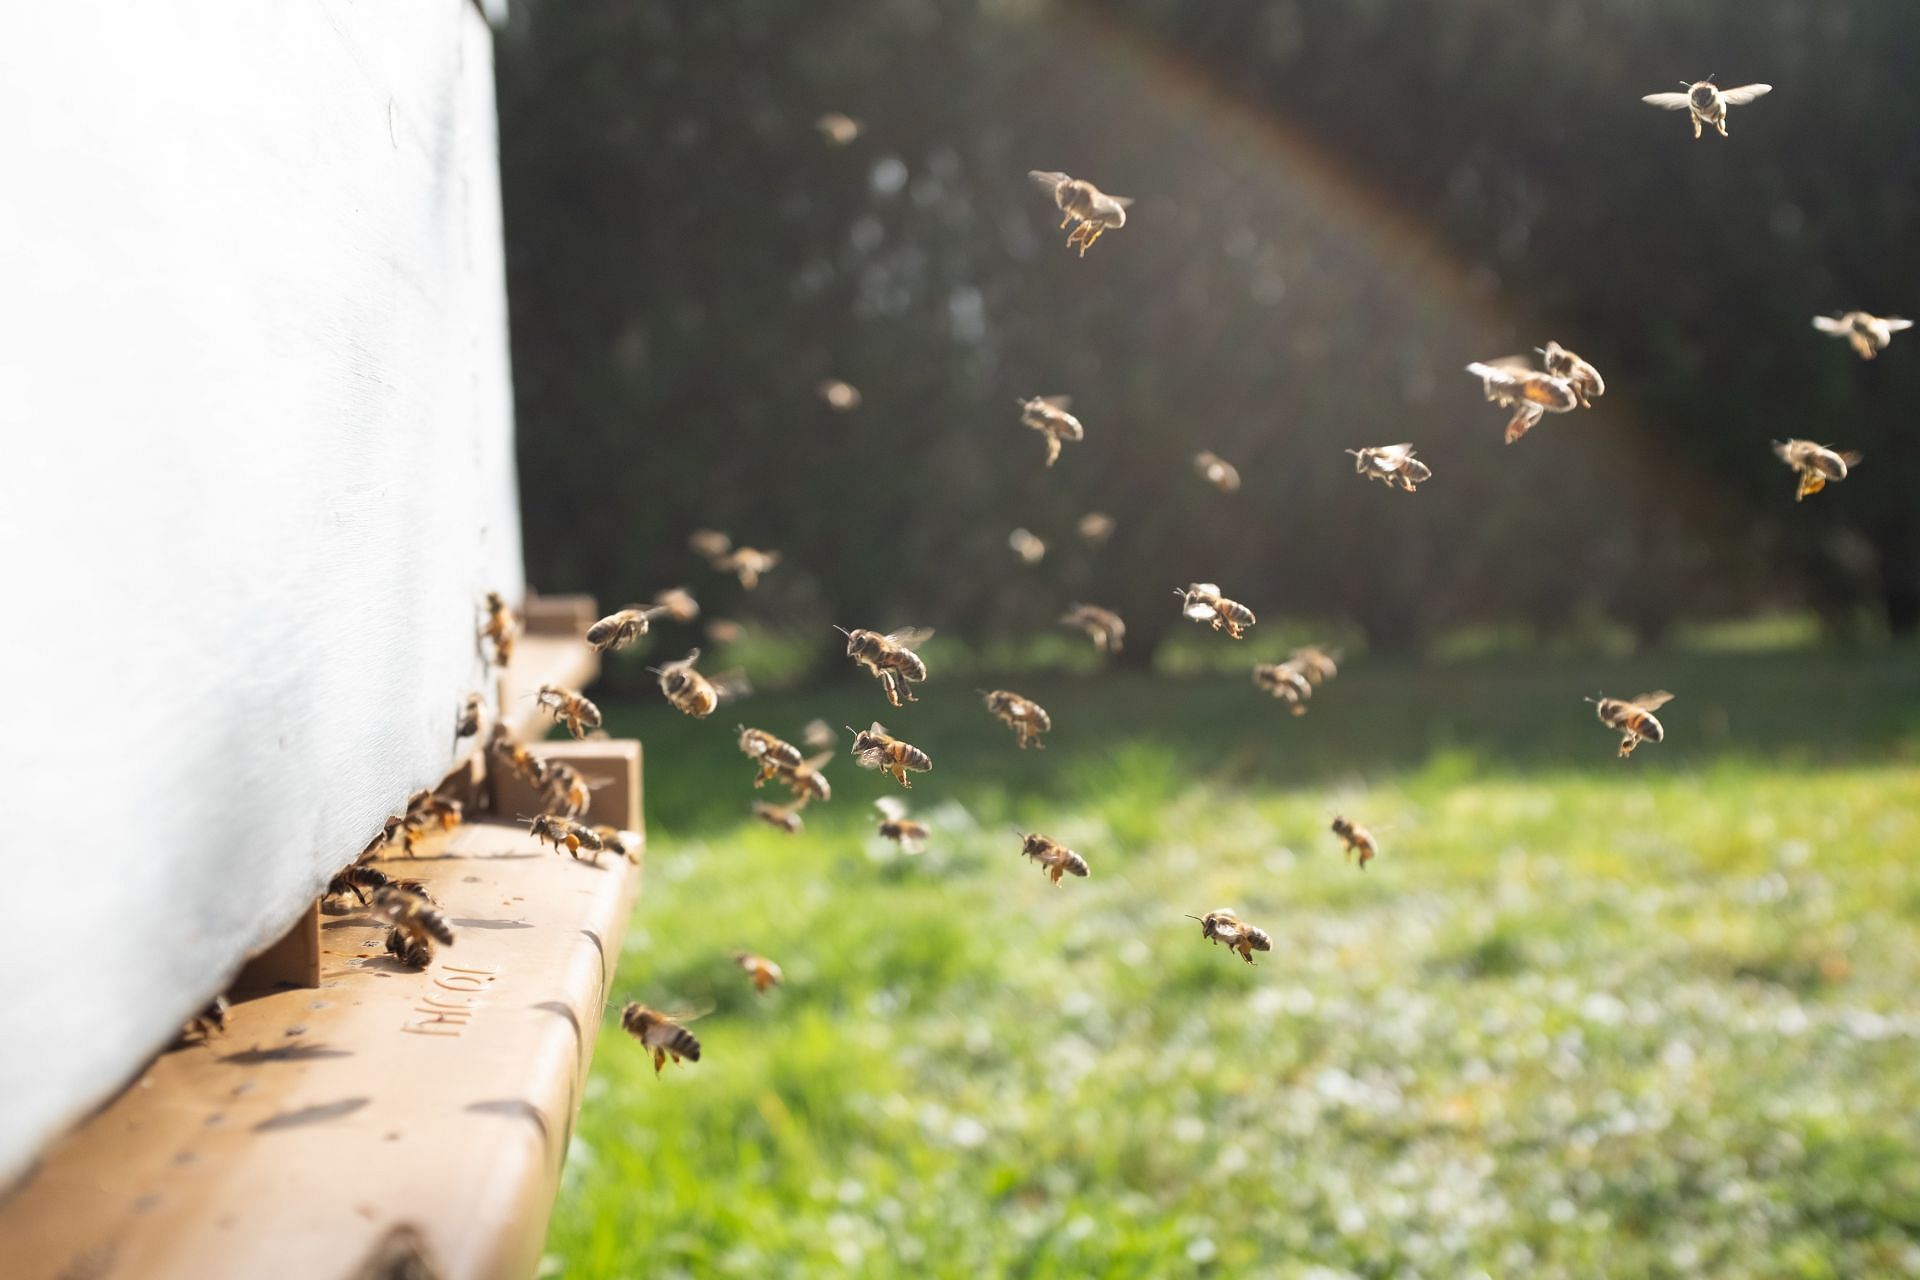 Additional precautions for bee sting (Image via Unsplash/Damien Tupinier)